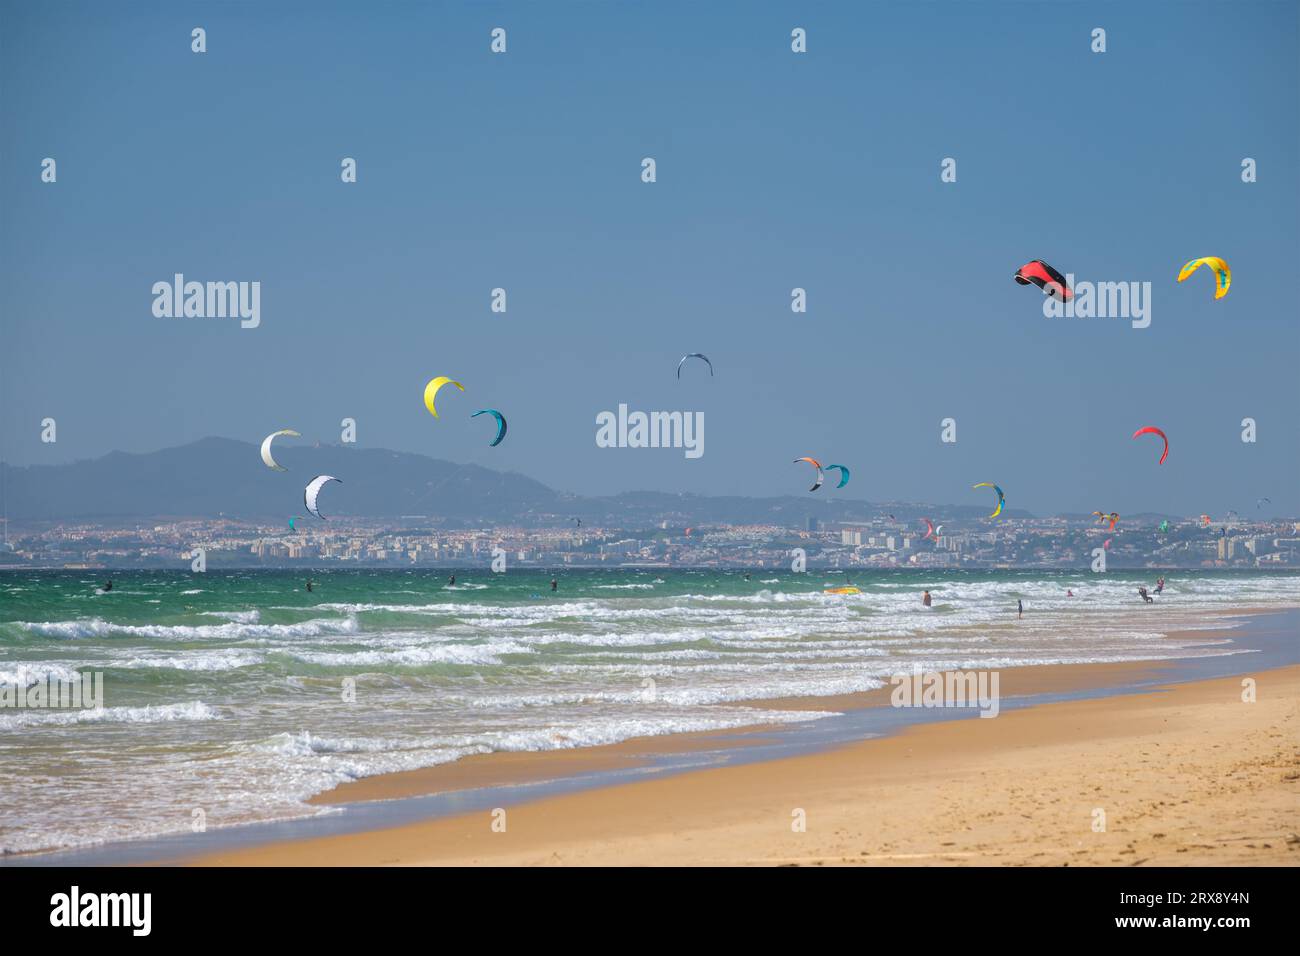 Kiteboarding kitesurfing kiteboarder kitesurfer kites on the ocean beach Stock Photo